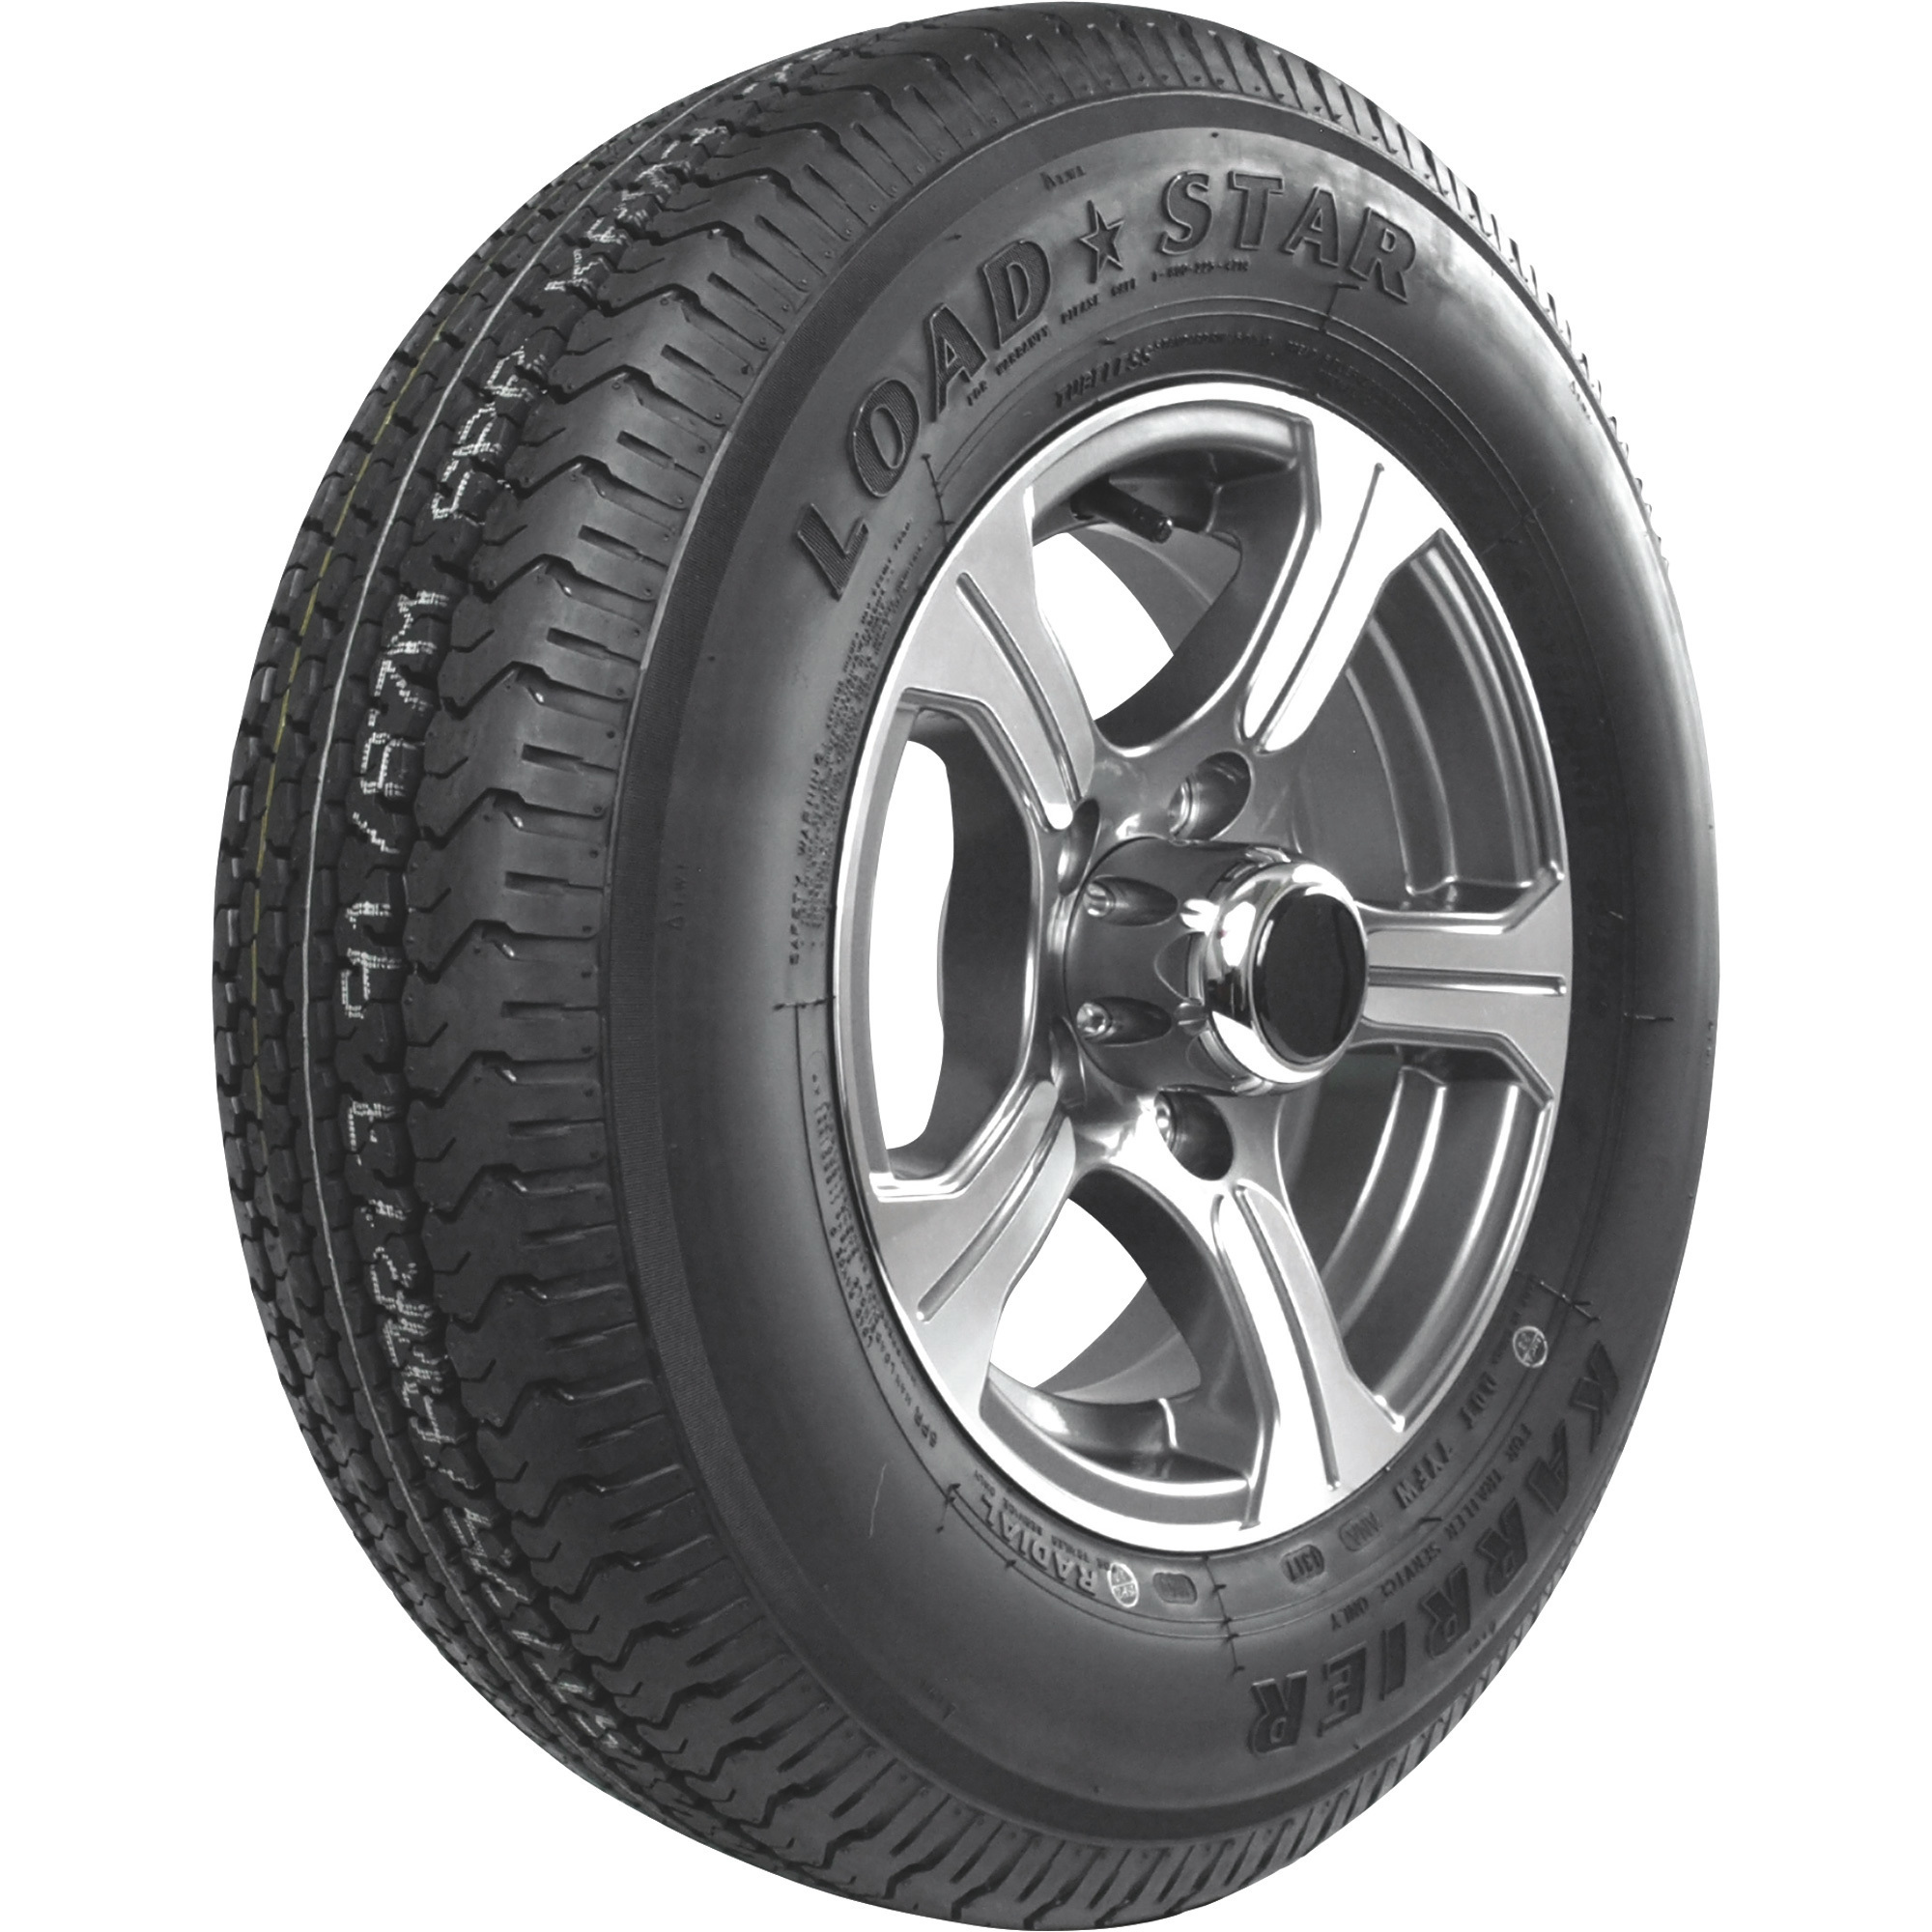 Kenda Loadstar Karrier Radial Trailer Tire and 5-Hole Aluminum Wheel with Hub Cap â 175/80Râ13 LRC, Gunmetal Gray